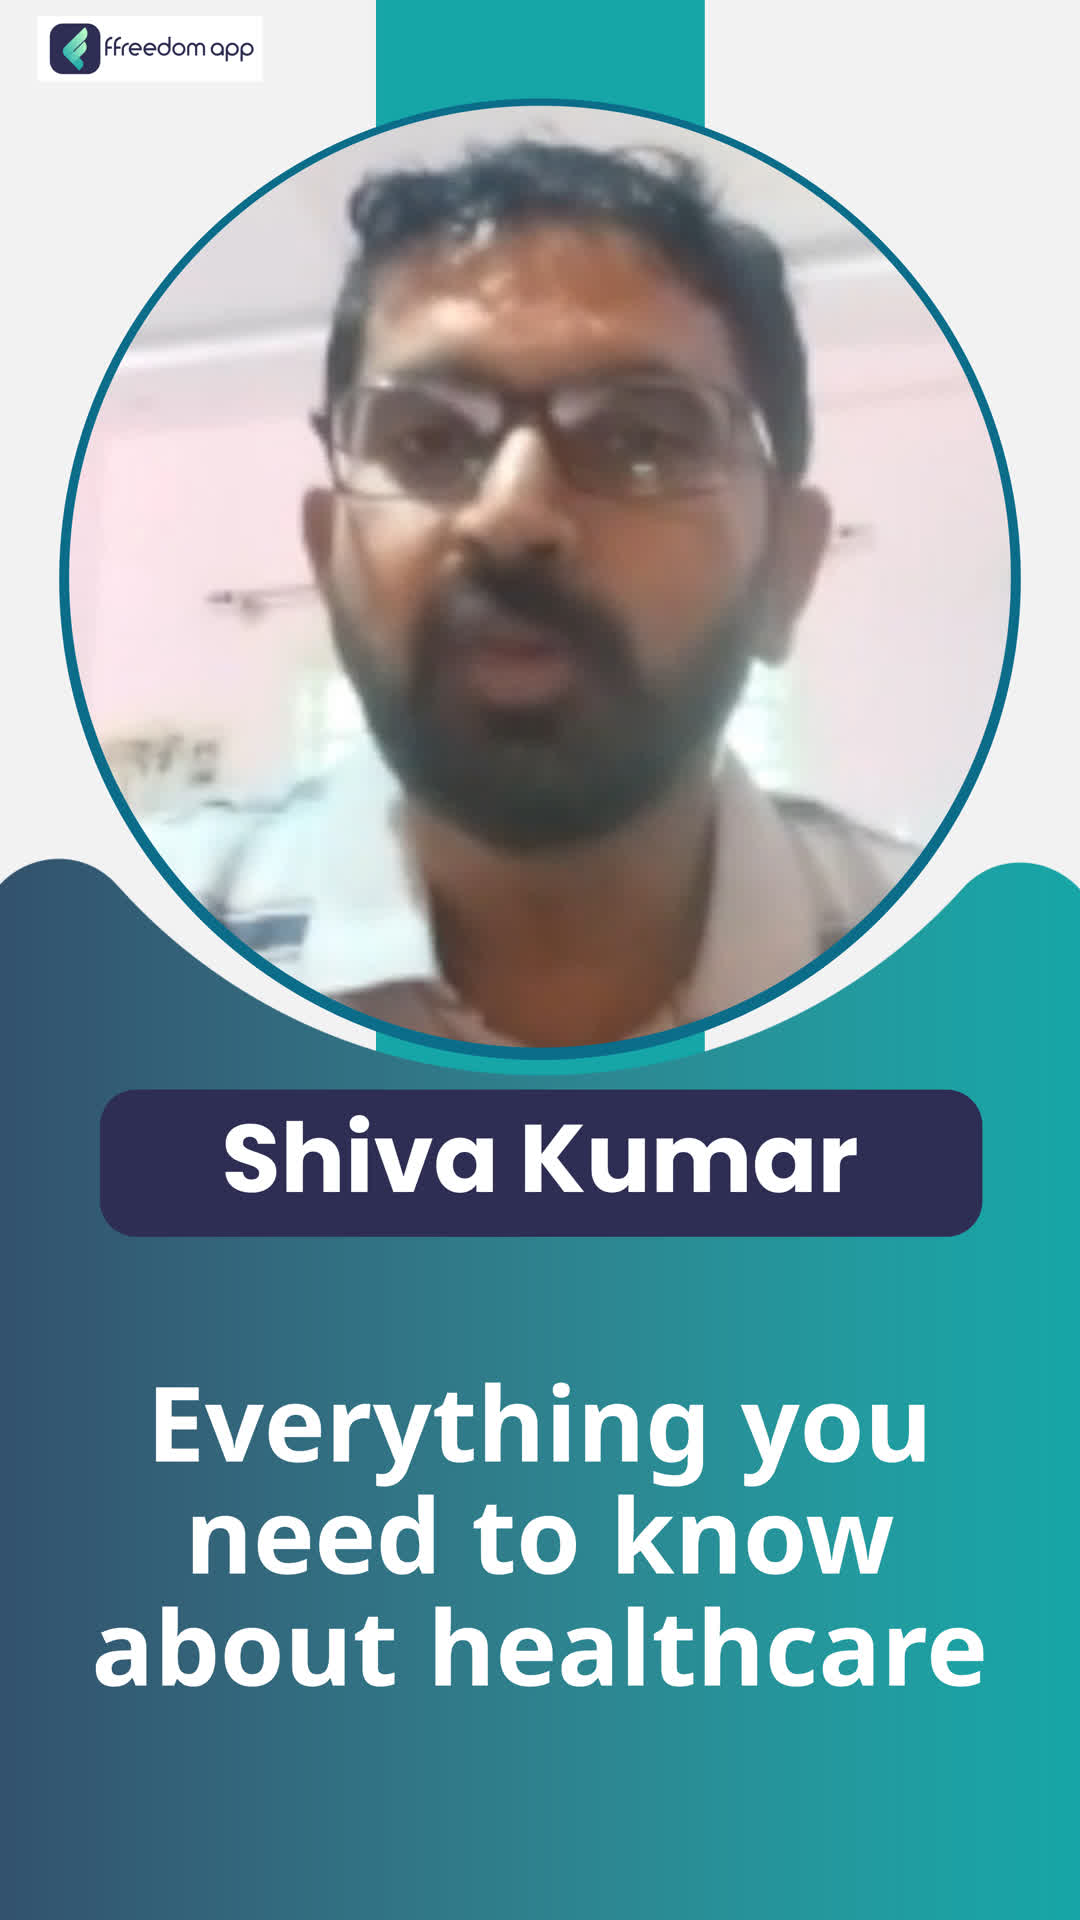 shiva kumar 's Honest Review of ffreedom app - Udupi ,Karnataka